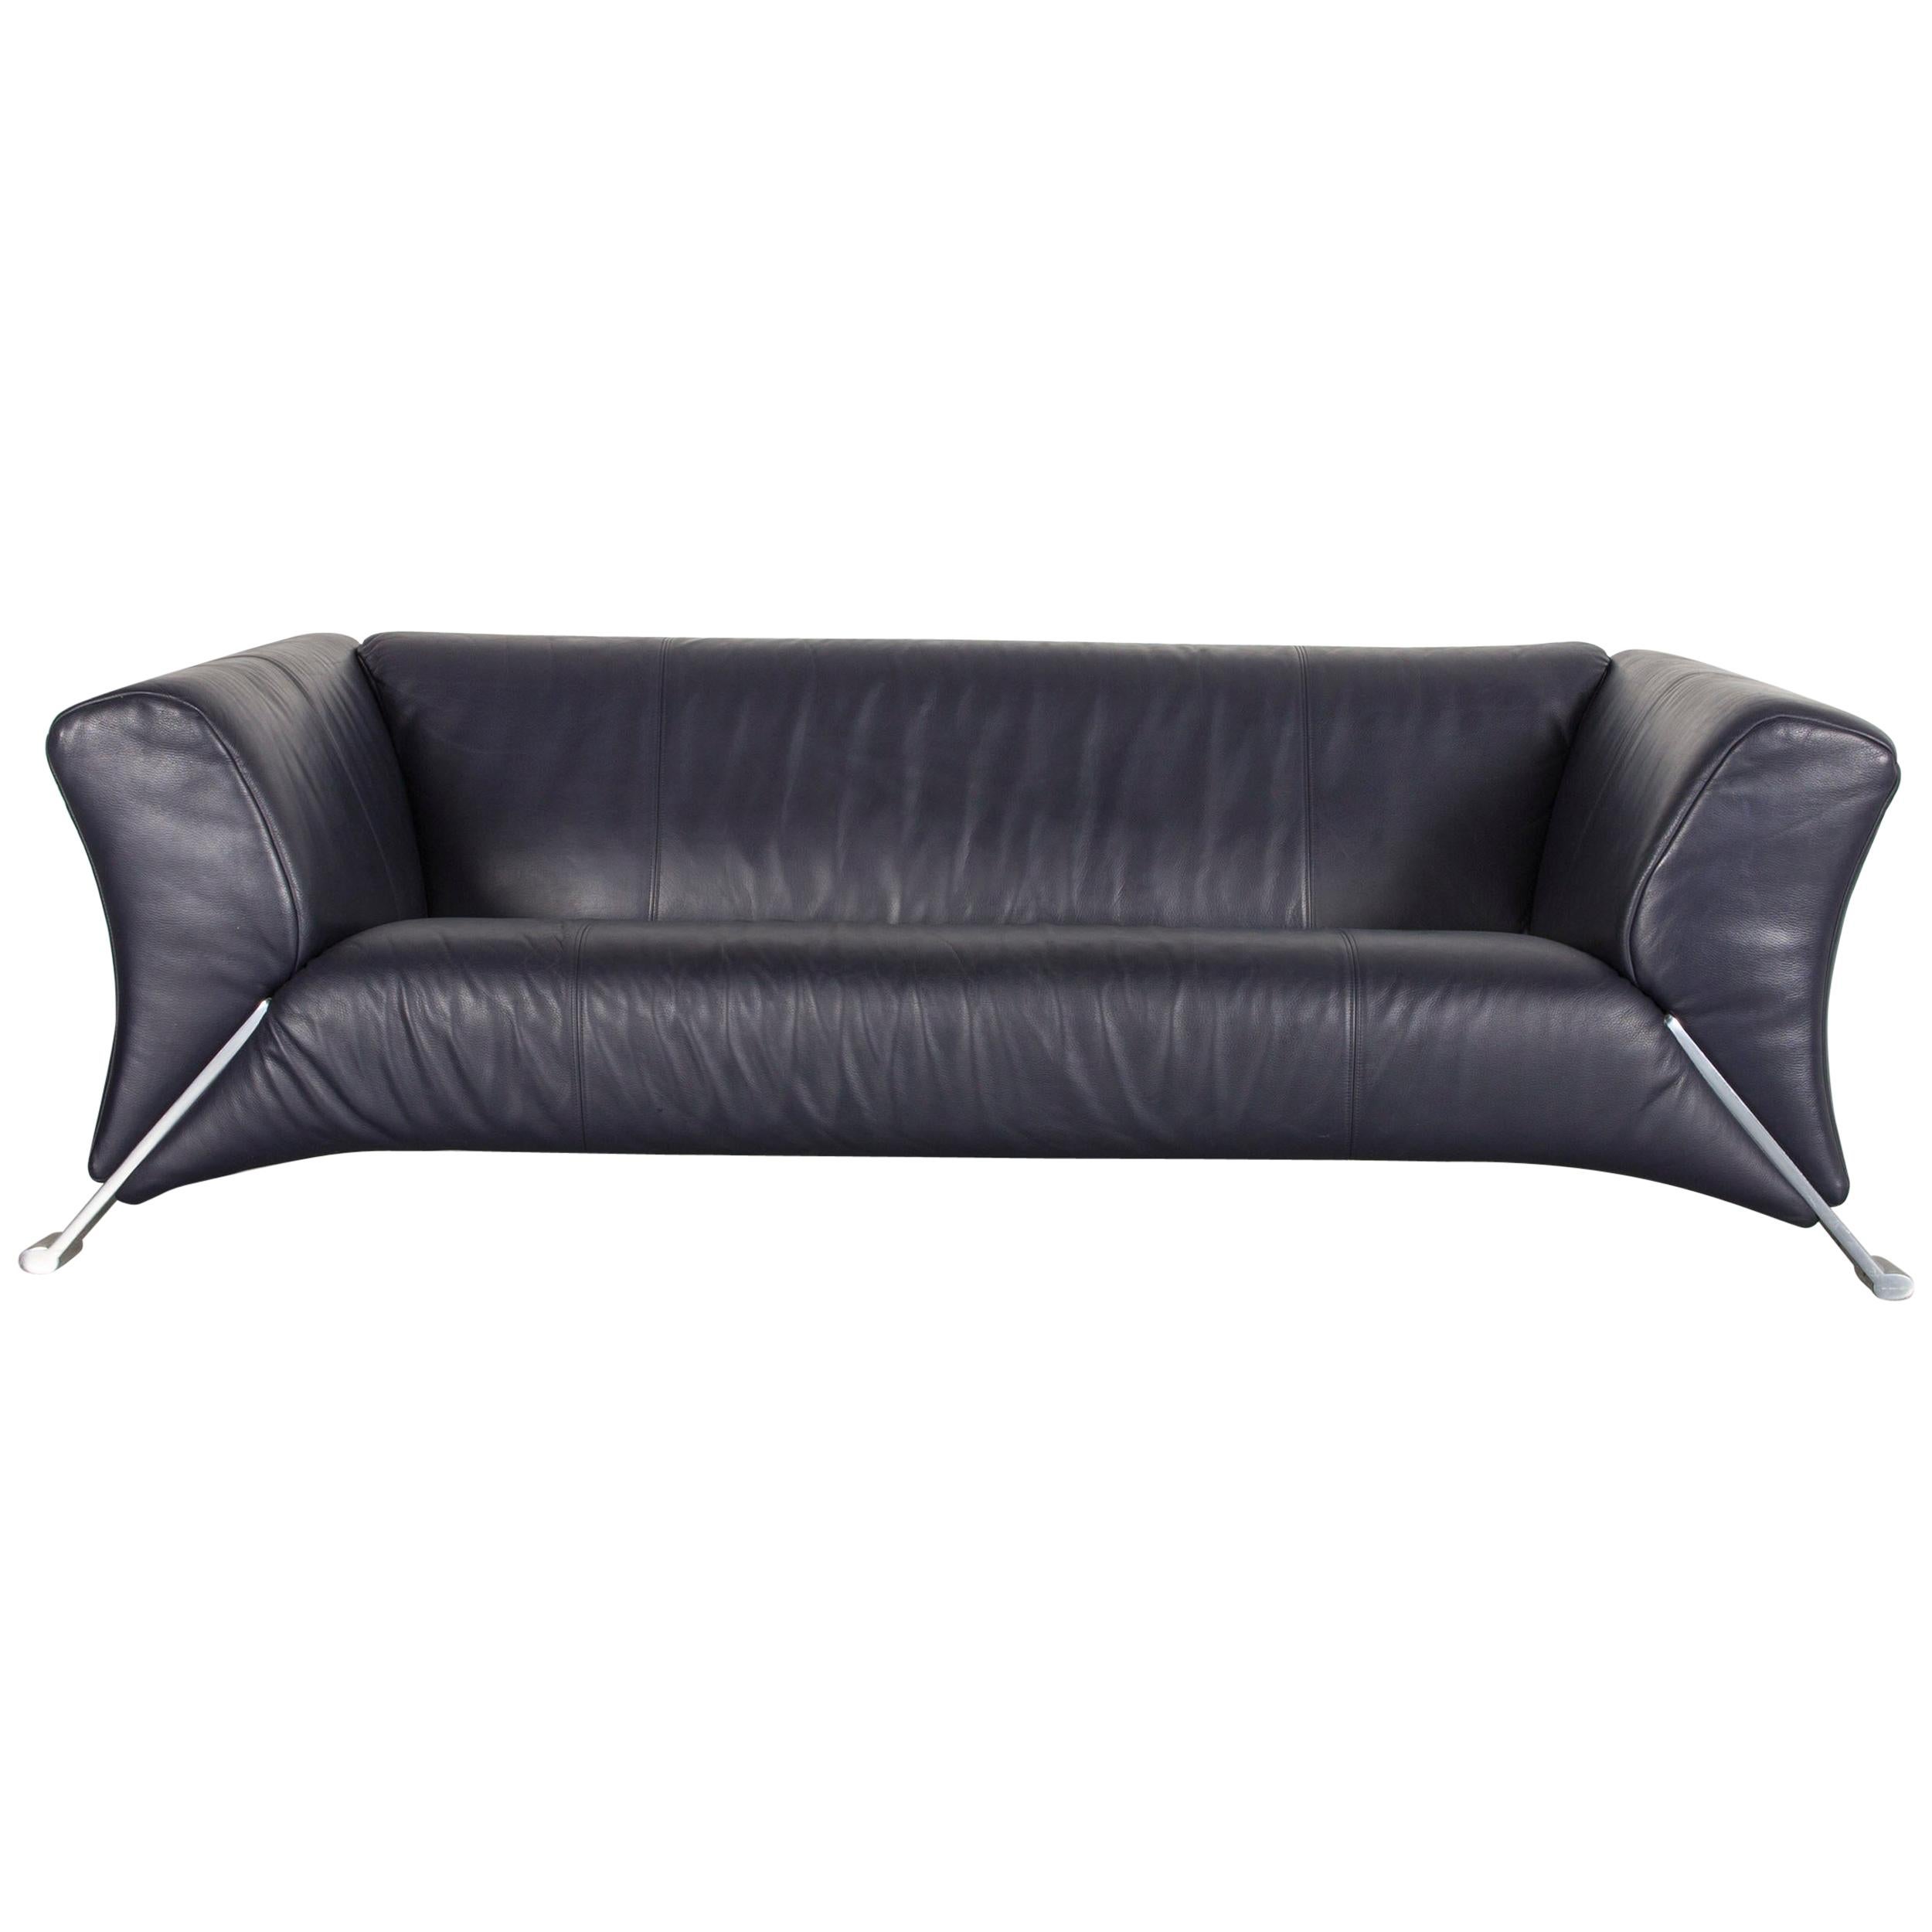 Rolf Benz 322 Designer Sofa Dark Blue Three-Seat Leather Modern Couch For Sale